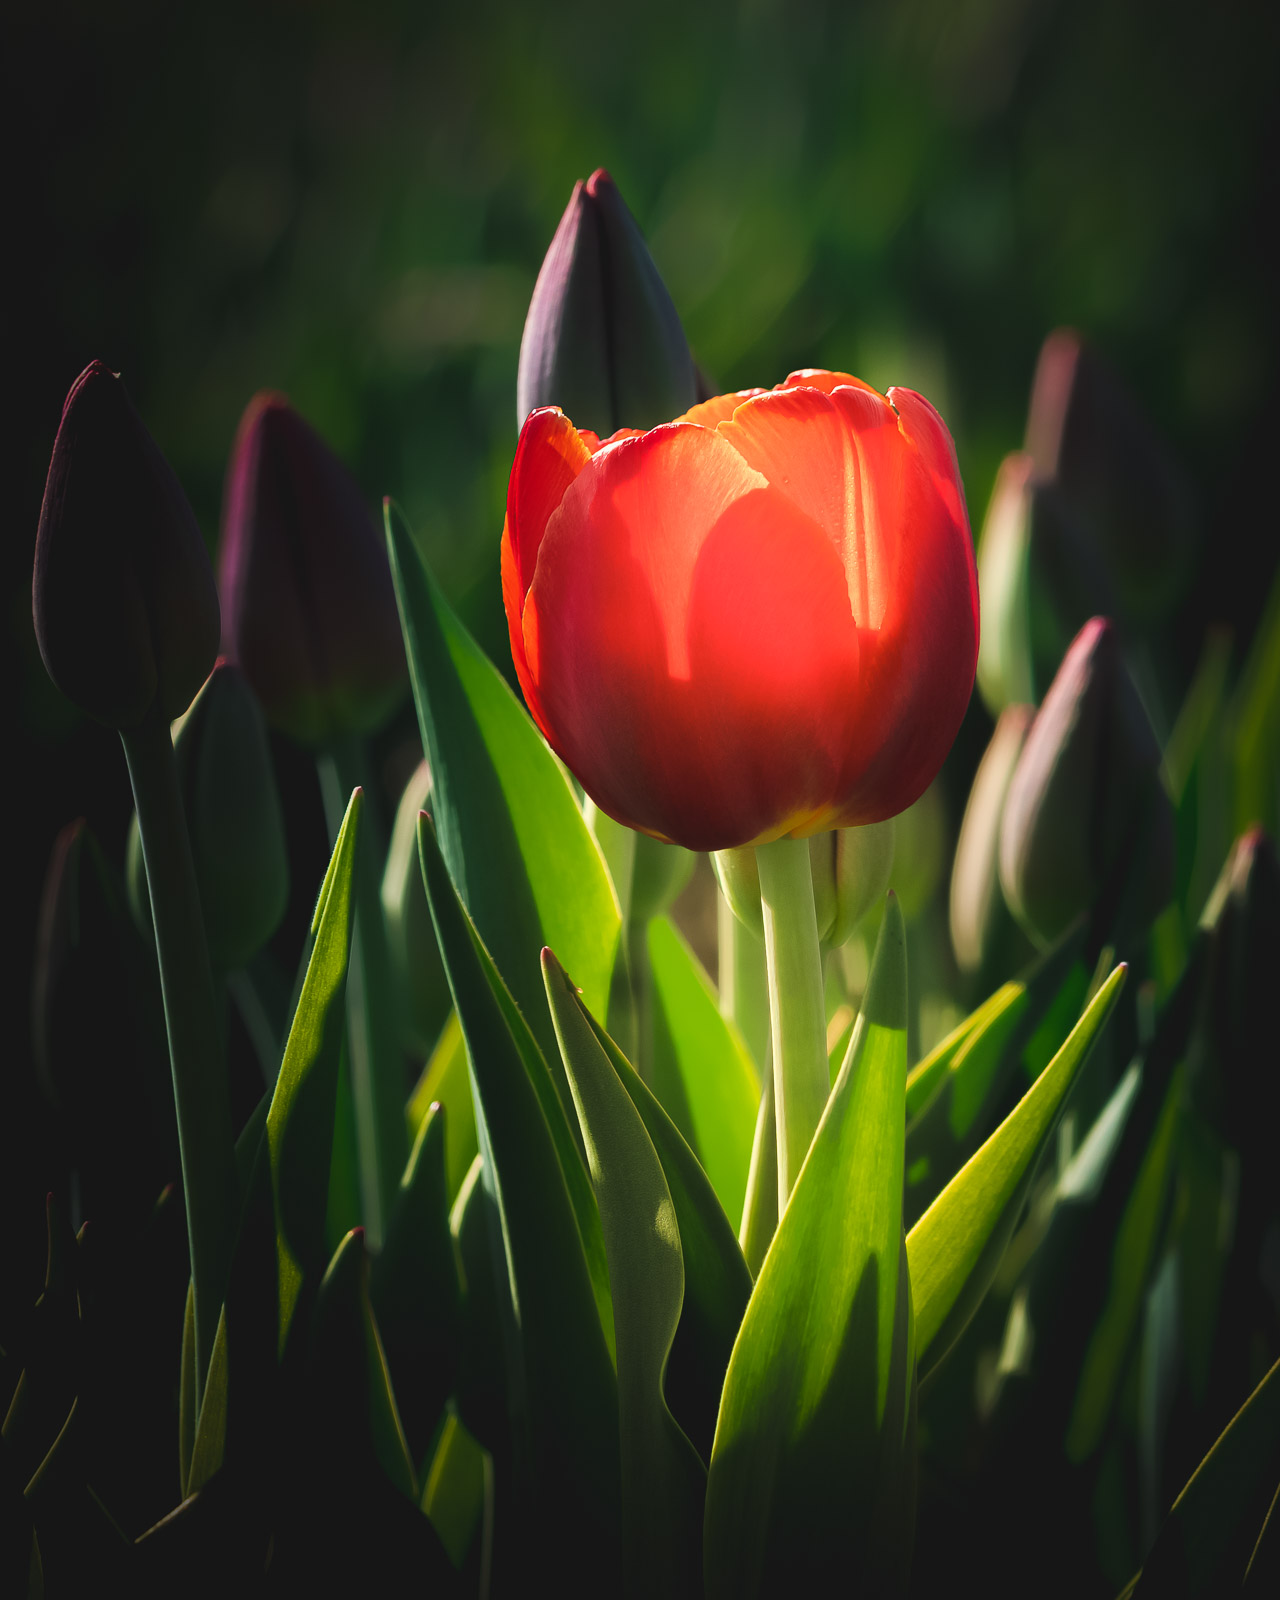 Ottawa Tulip Festival Photographing Tulips Tips